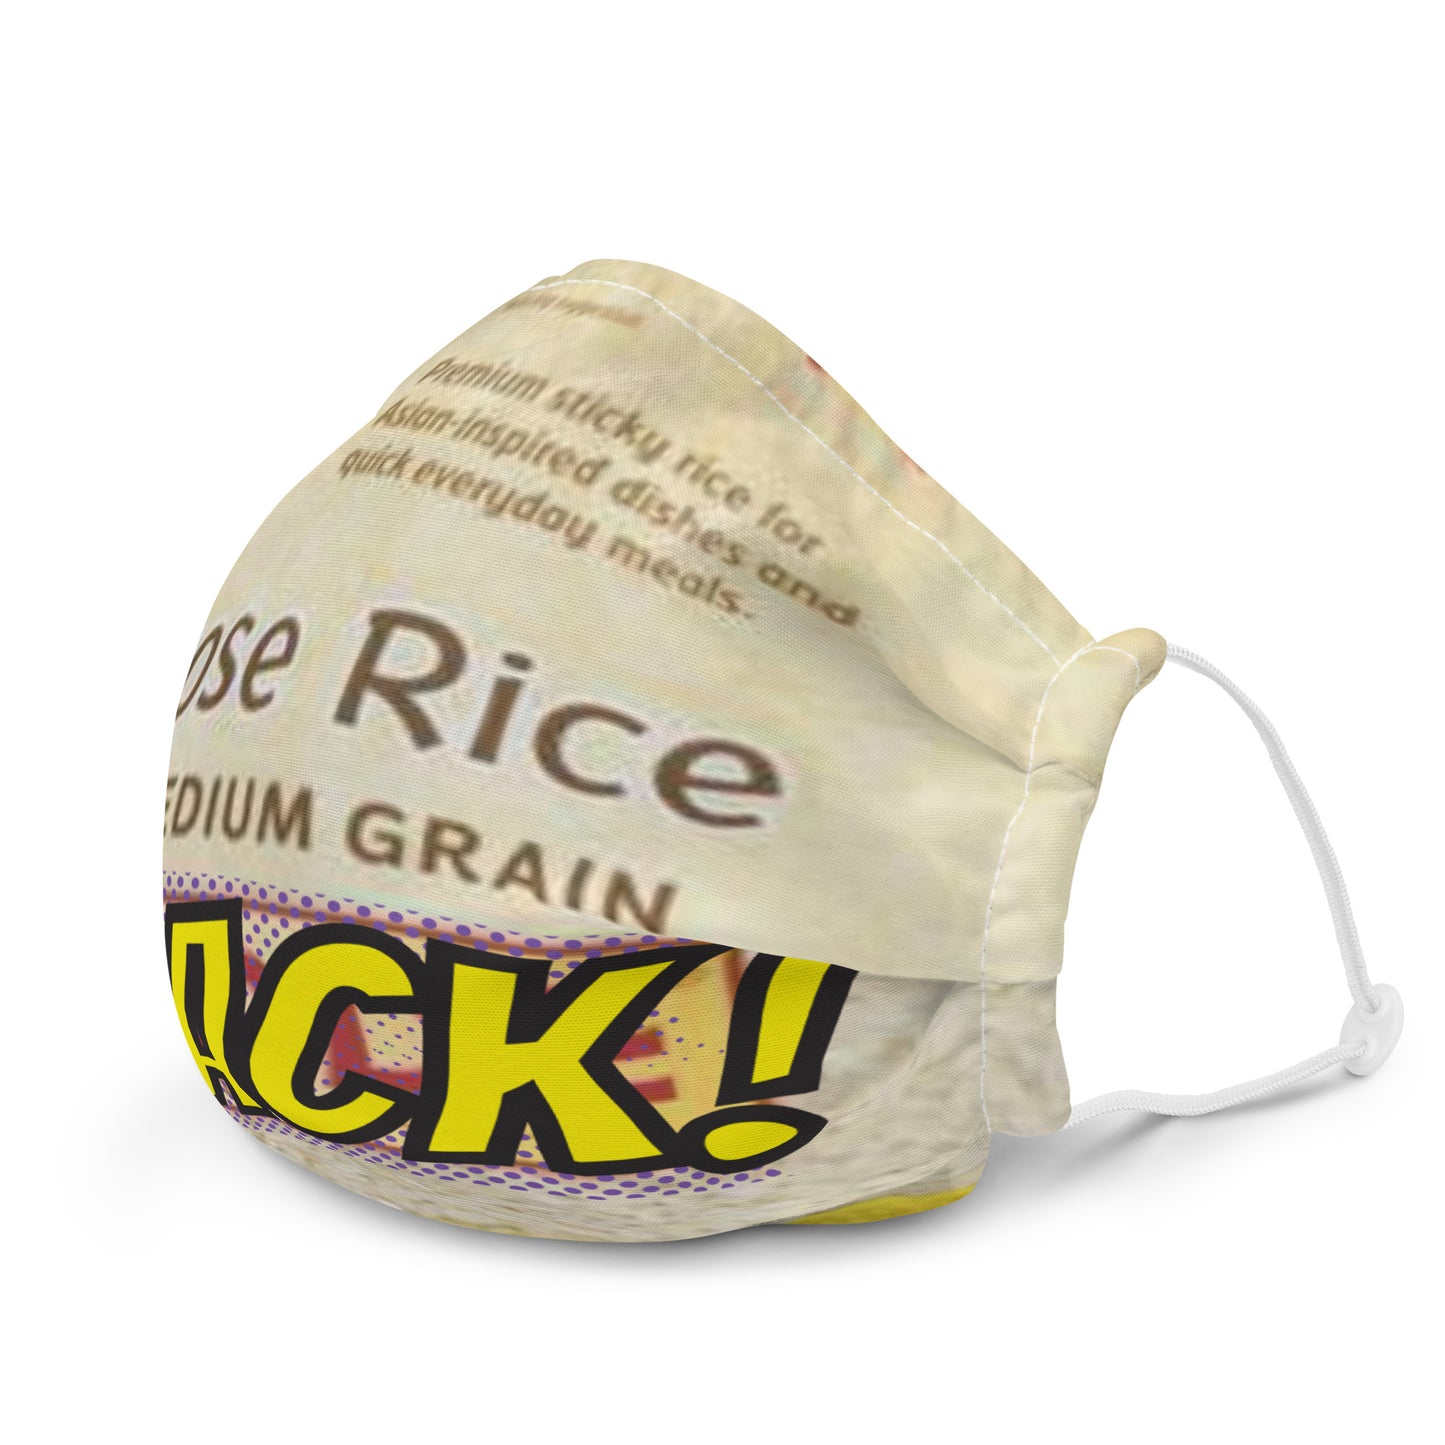 Rice Bag Premium face mask